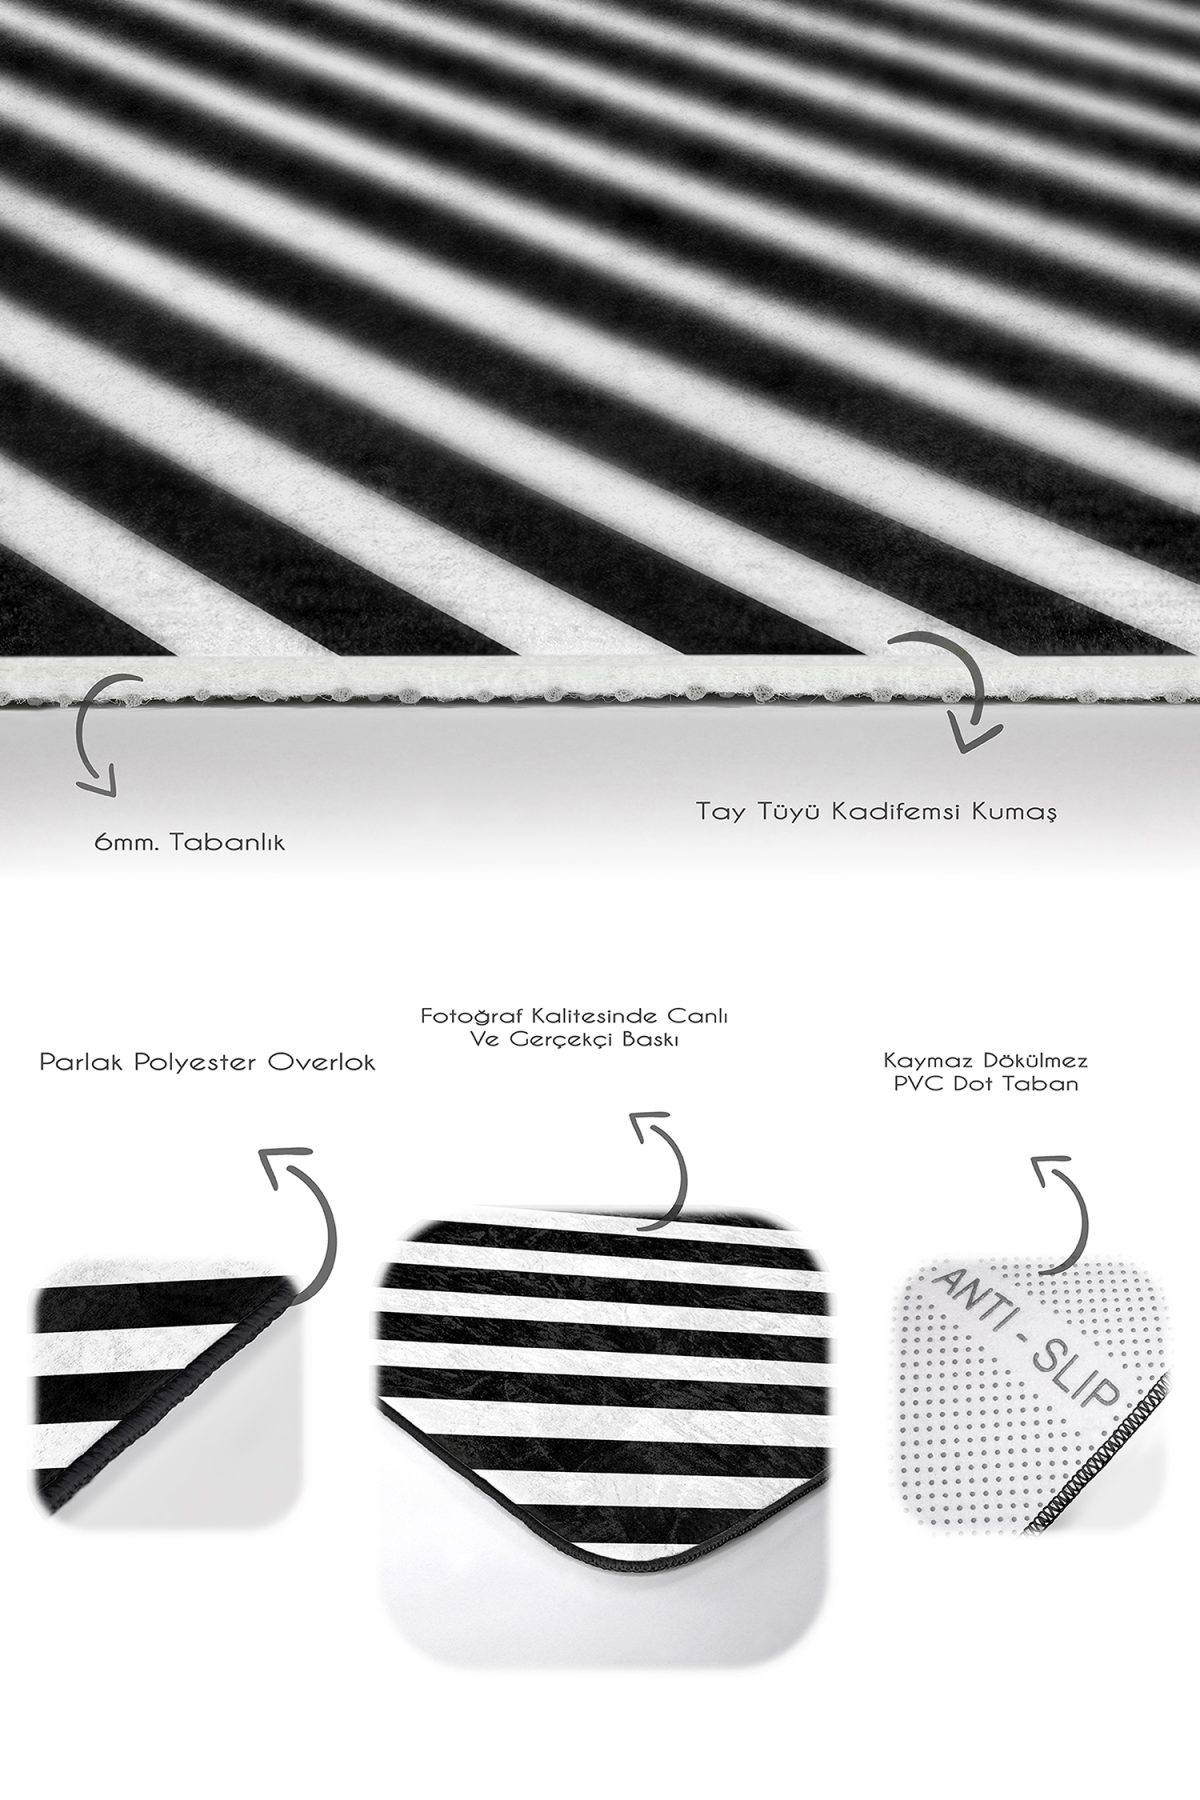 Siyah Beyaz Çapraz Çizgi Tasarımlı 2'li Kaymaz Tabanlı Banyo & Mutfak Paspas Takımı Realhomes